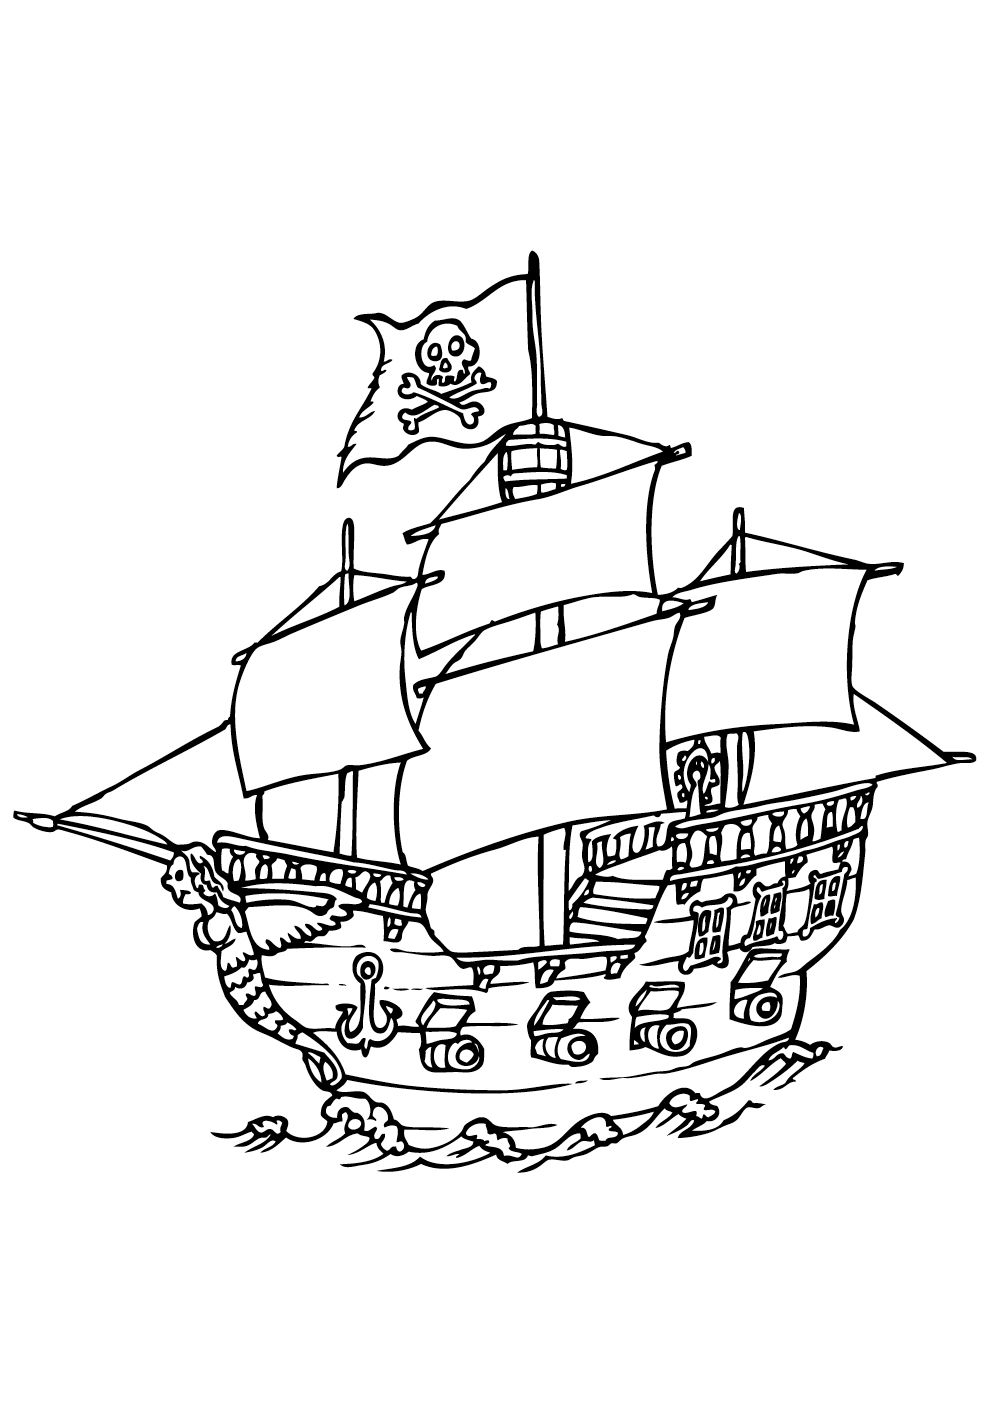 Dibujo para colorear: Pirate ship (Transporte) #138247 - Dibujos para Colorear e Imprimir Gratis